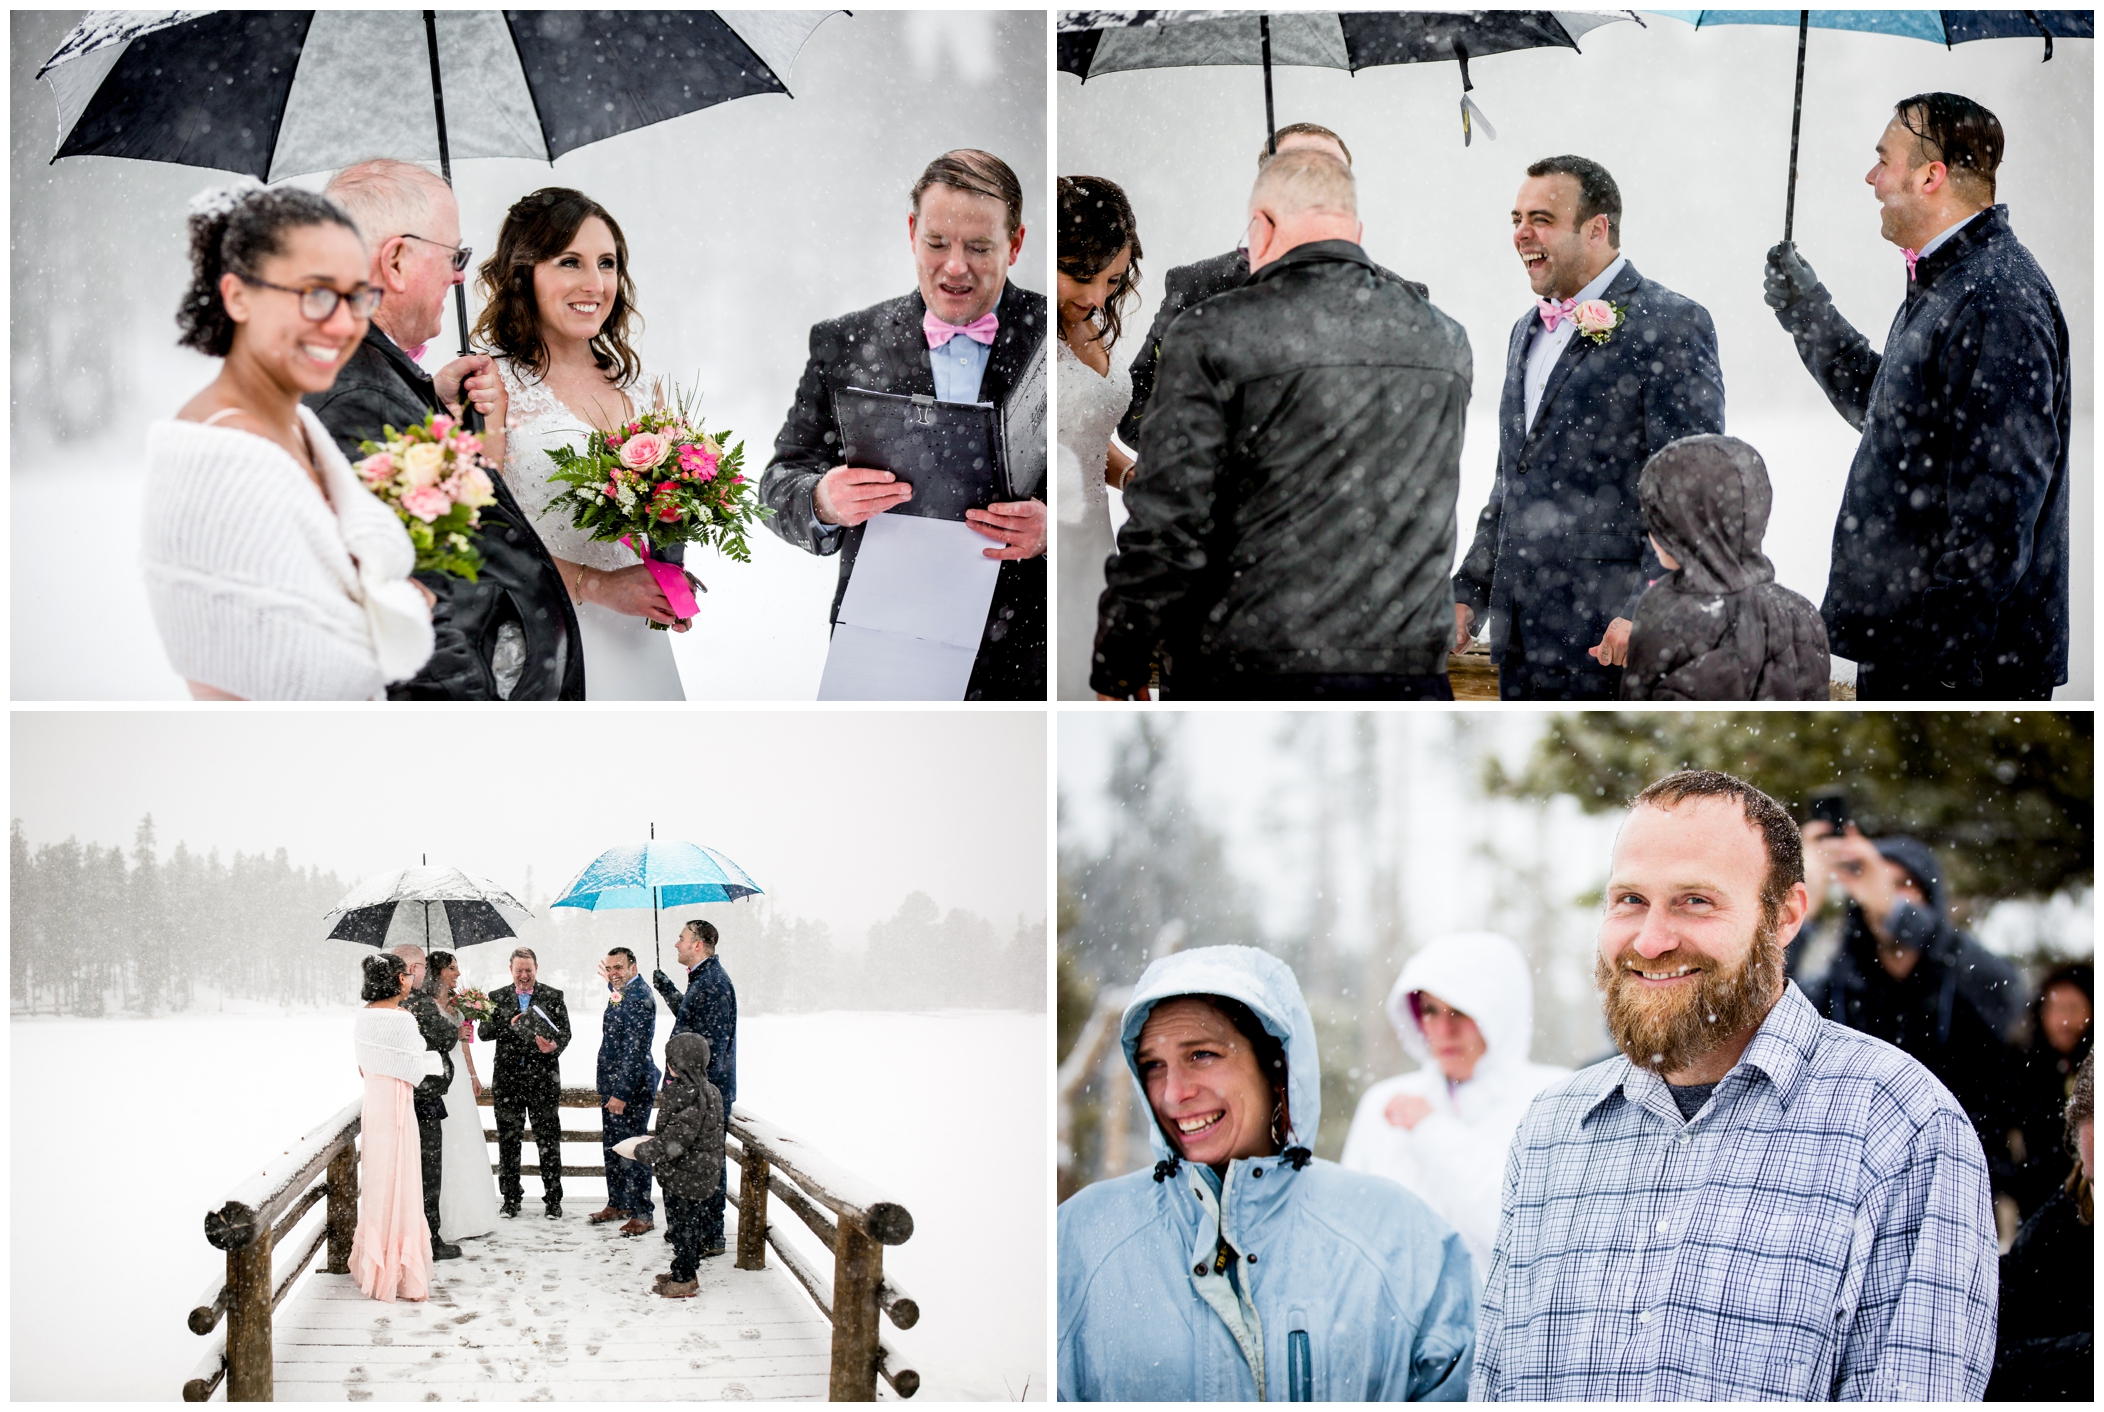 Sprague Lake wedding ceremony in winter